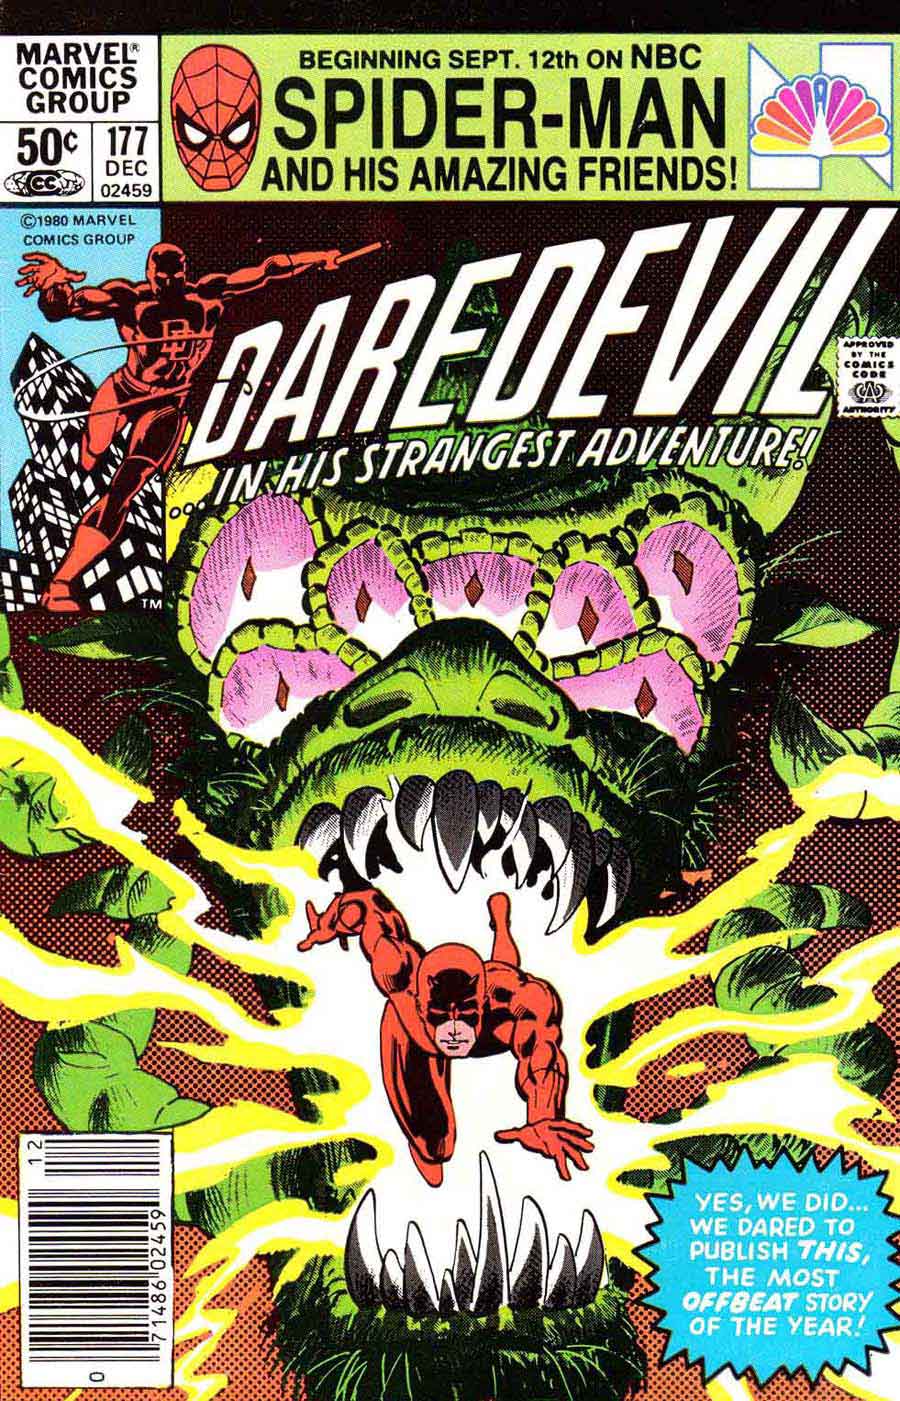 Daredevil v1 #177 marvel comic book cover art by Frank Miller